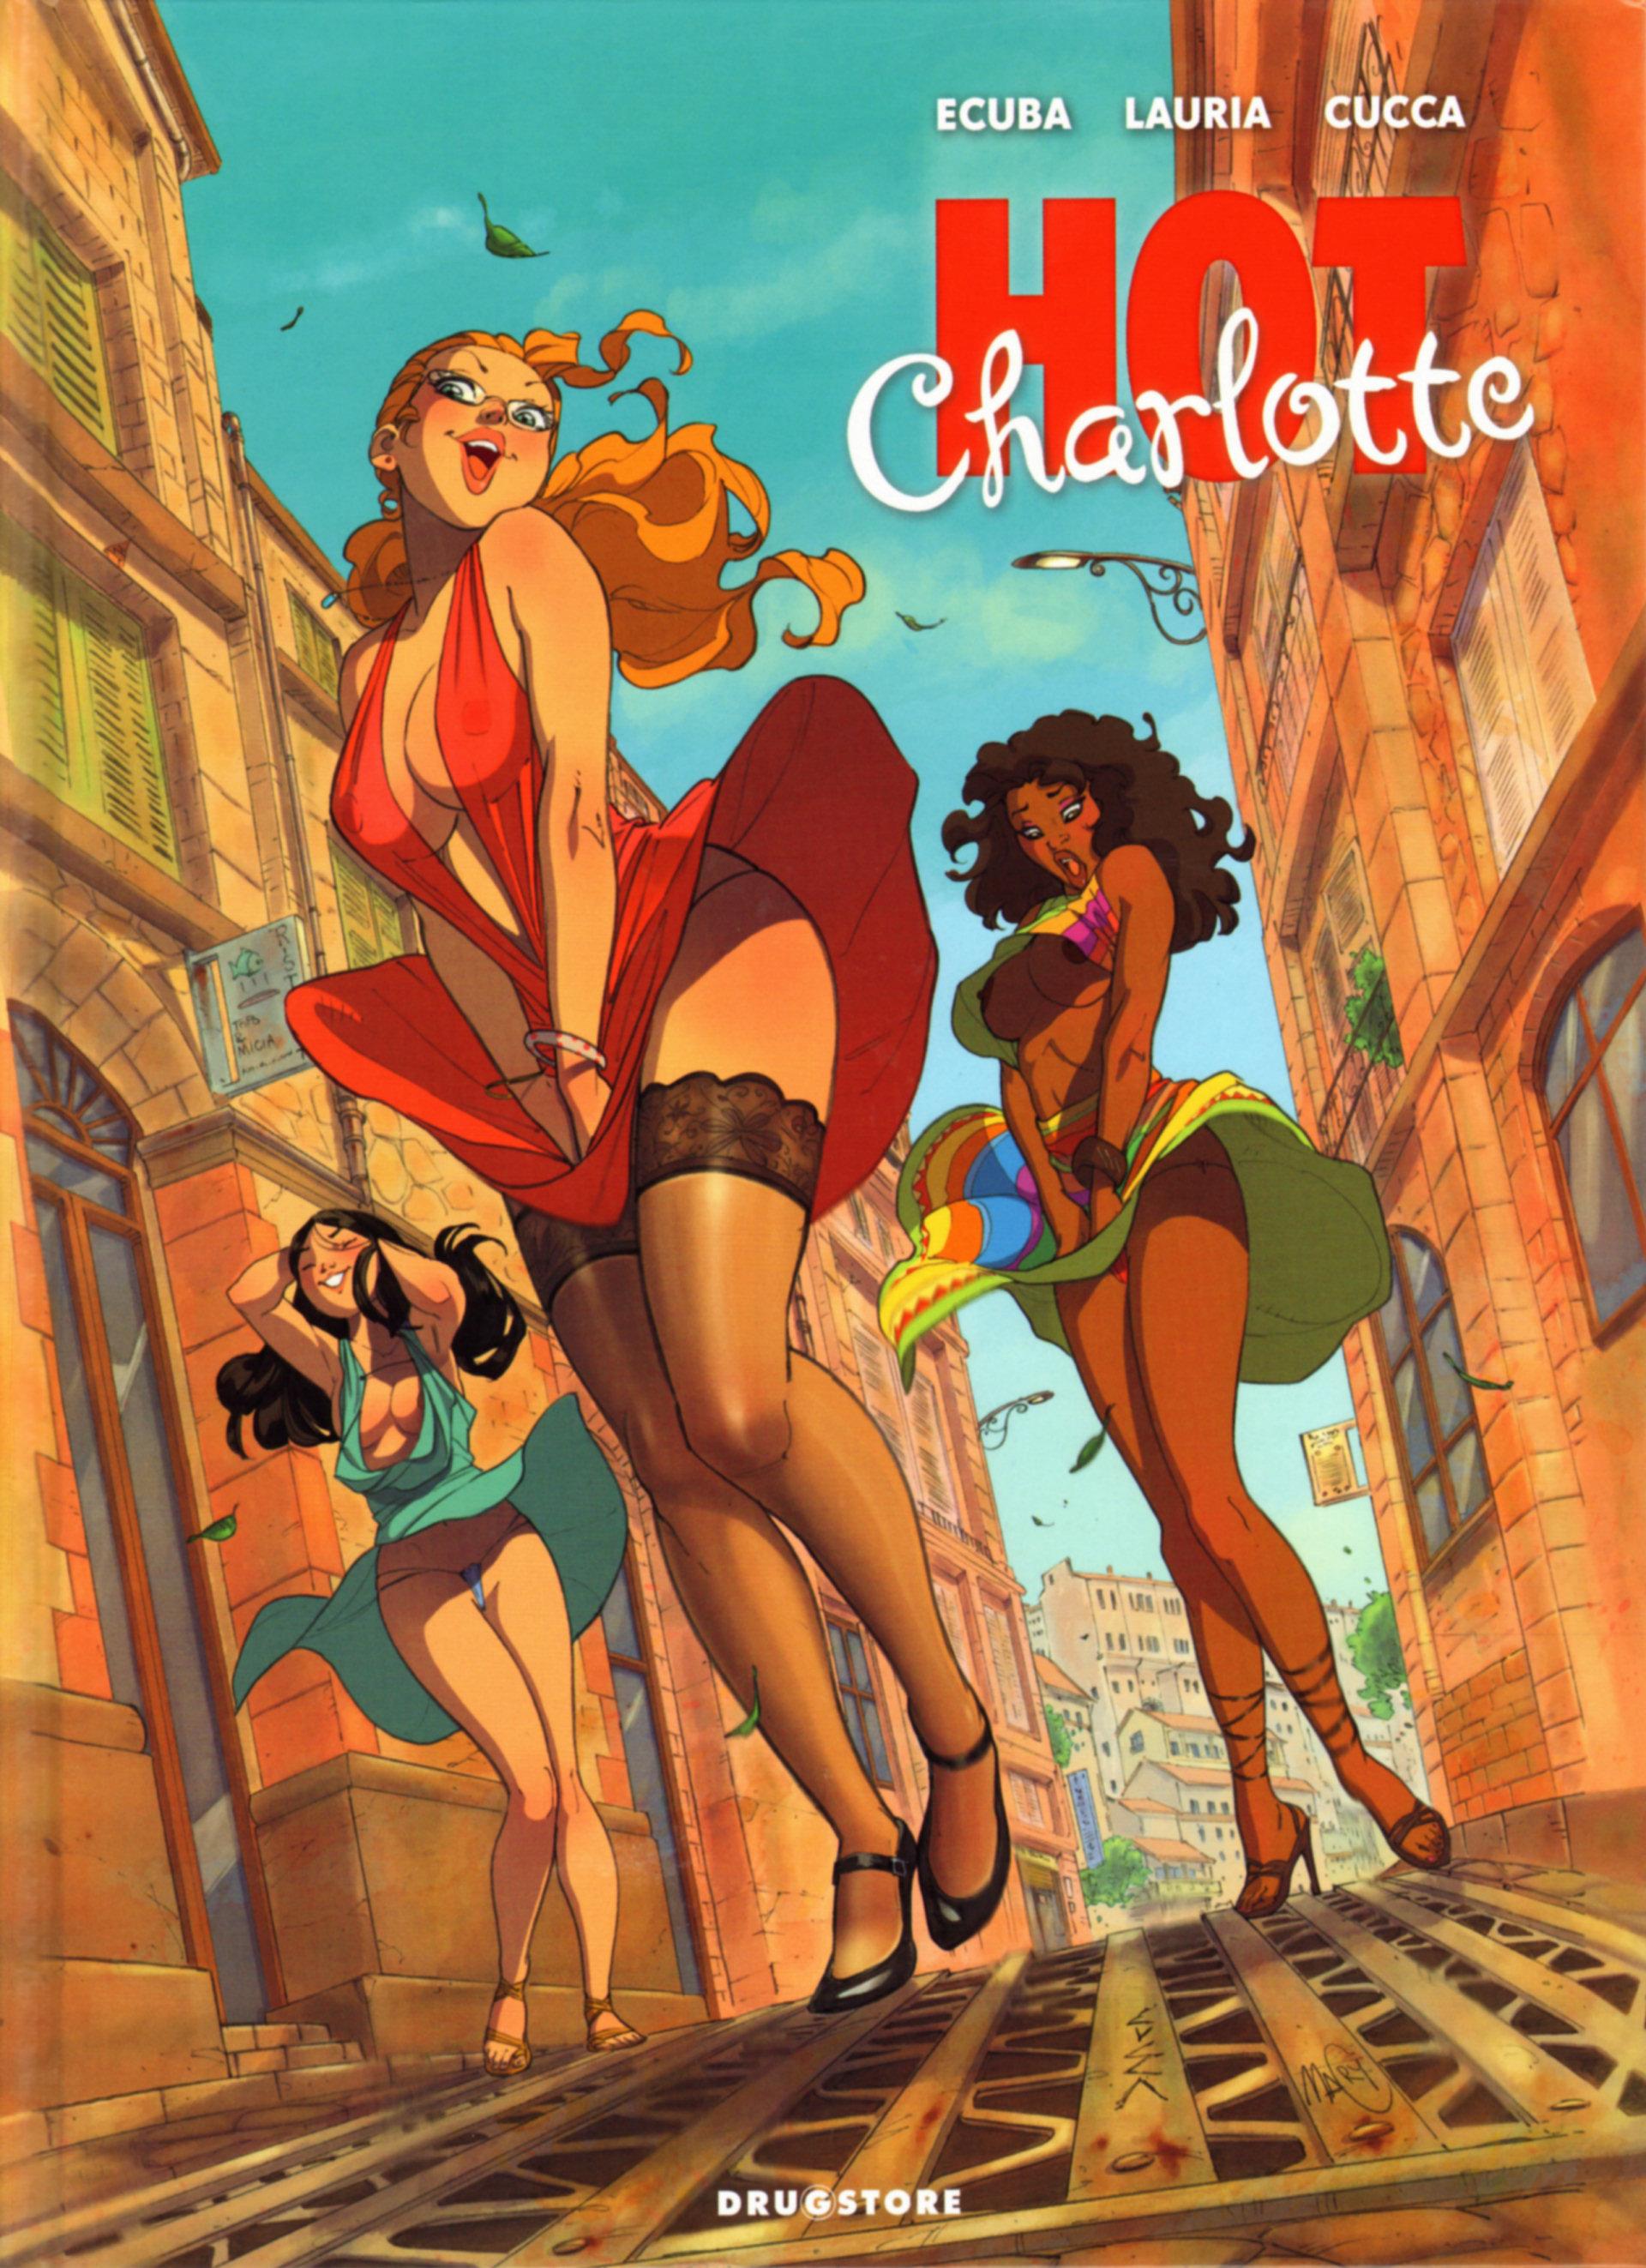 [Comix] Vincenzo Cucca Hot Charlotte - Volume #01 / Hot Charlotte (Vincenzo Cucca, , www.drugstoru.com) [Feature (Story, Plot Based)] [JPG] [fra]